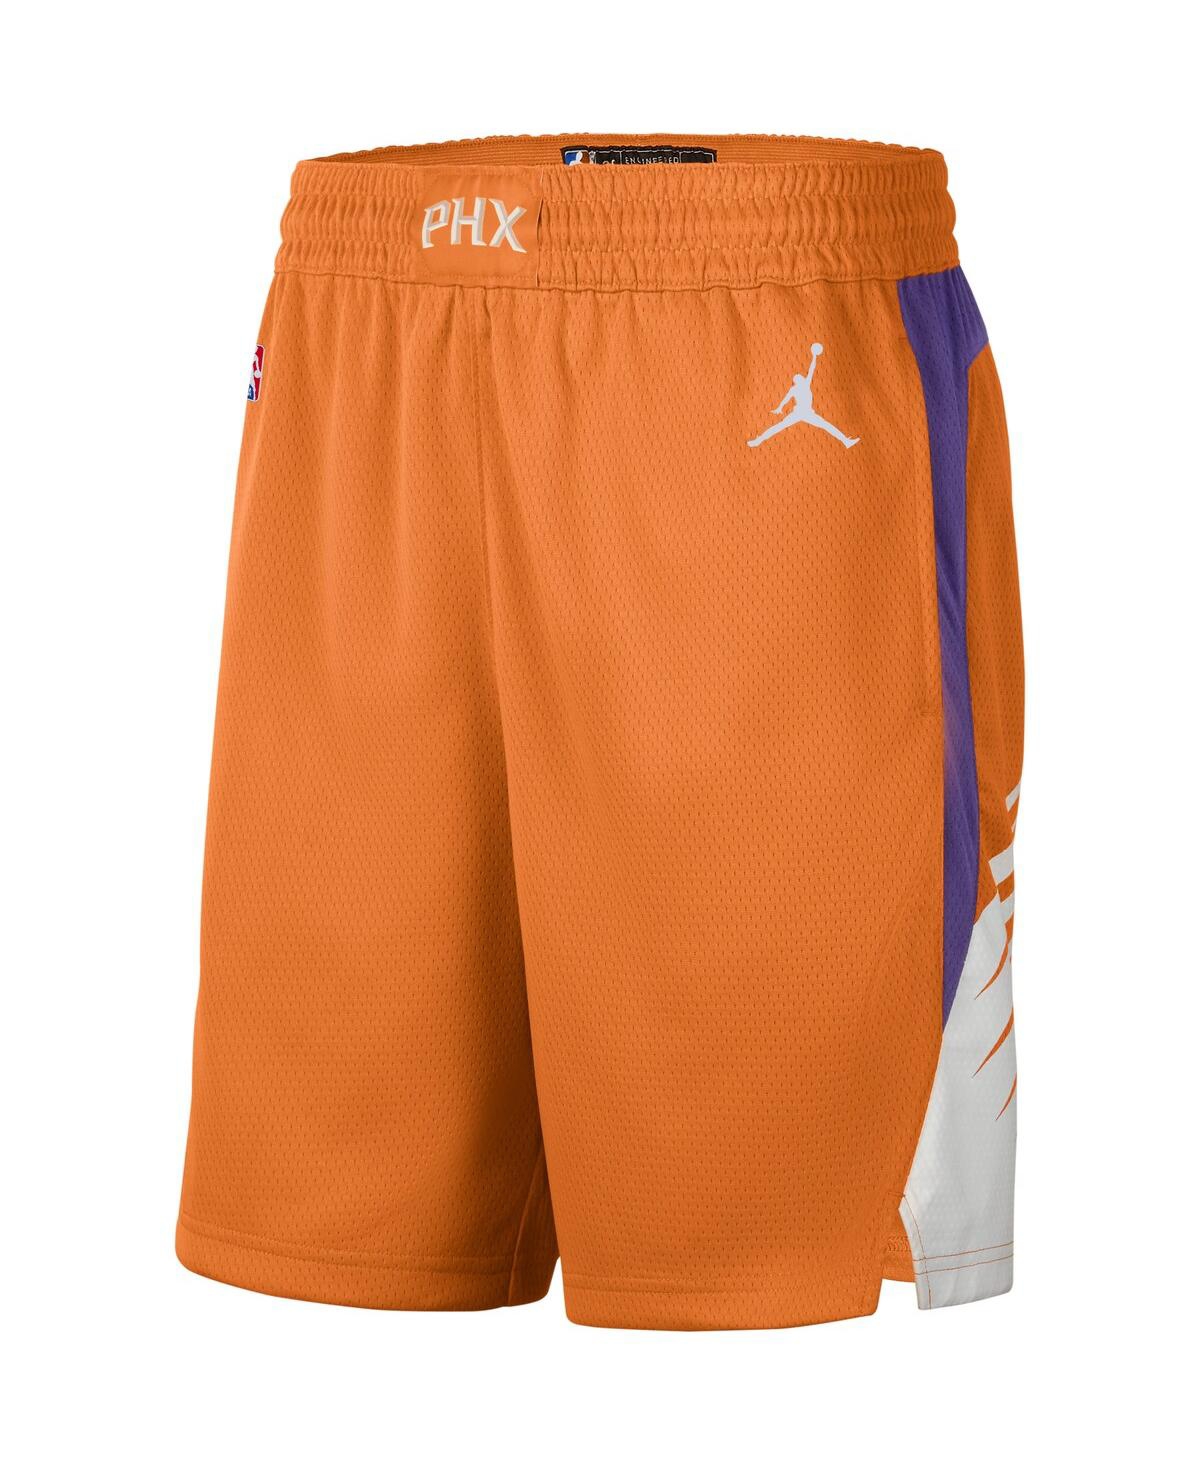 Men's Jordan Brand Devin Booker Orange Phoenix Suns 2020/21 Swingman Jersey  - Statement Edition